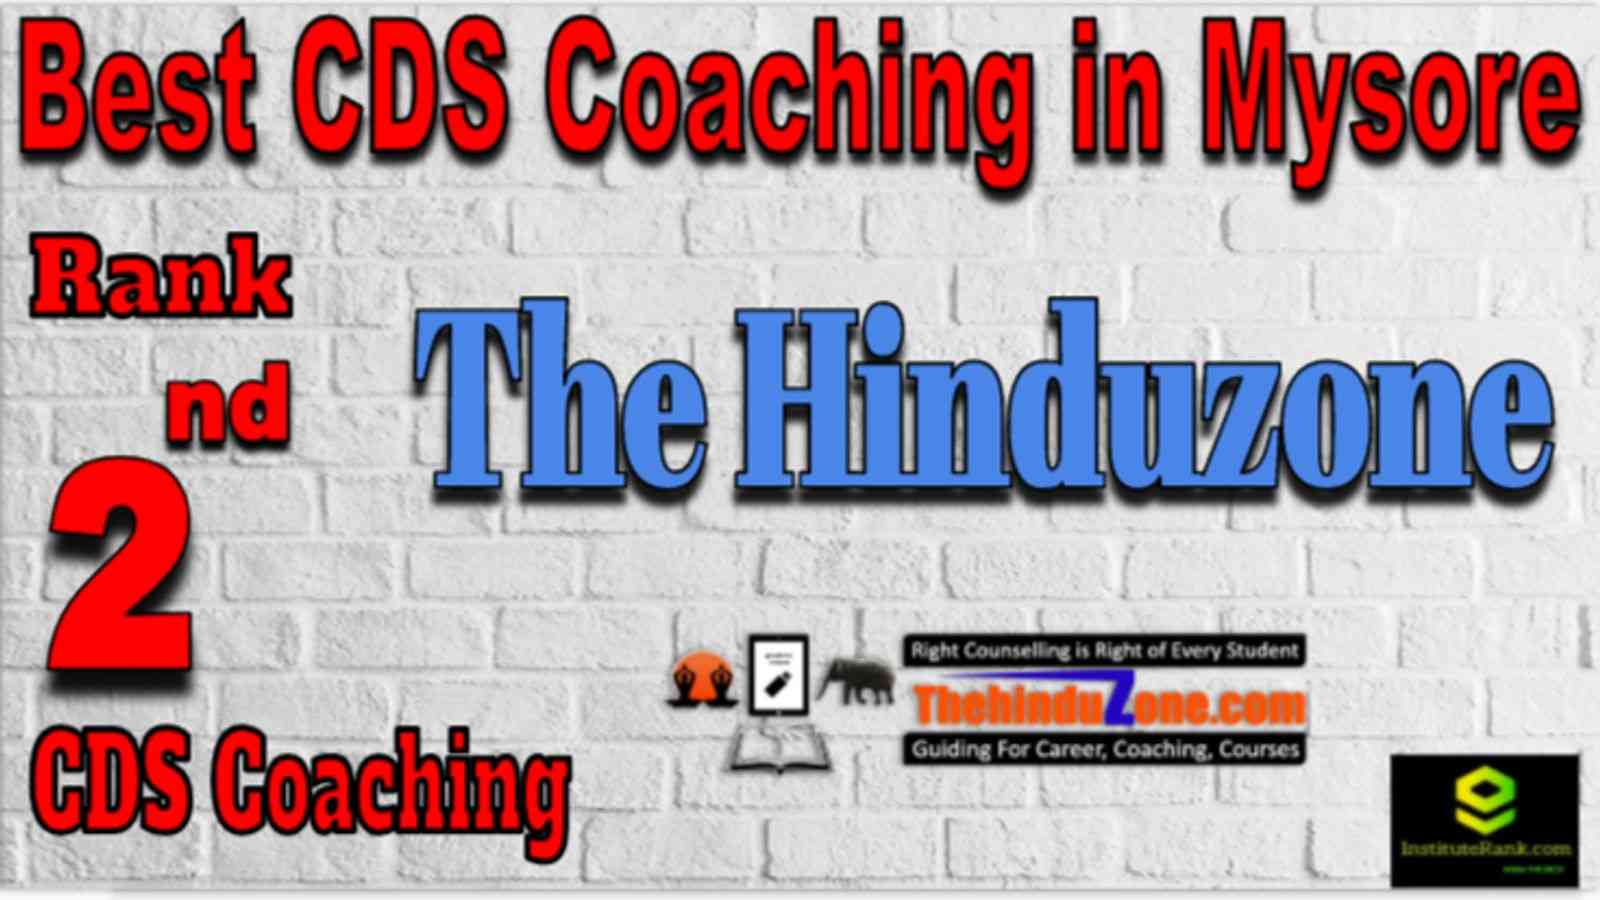 Rank 2 Best CDS Coaching in Mysore